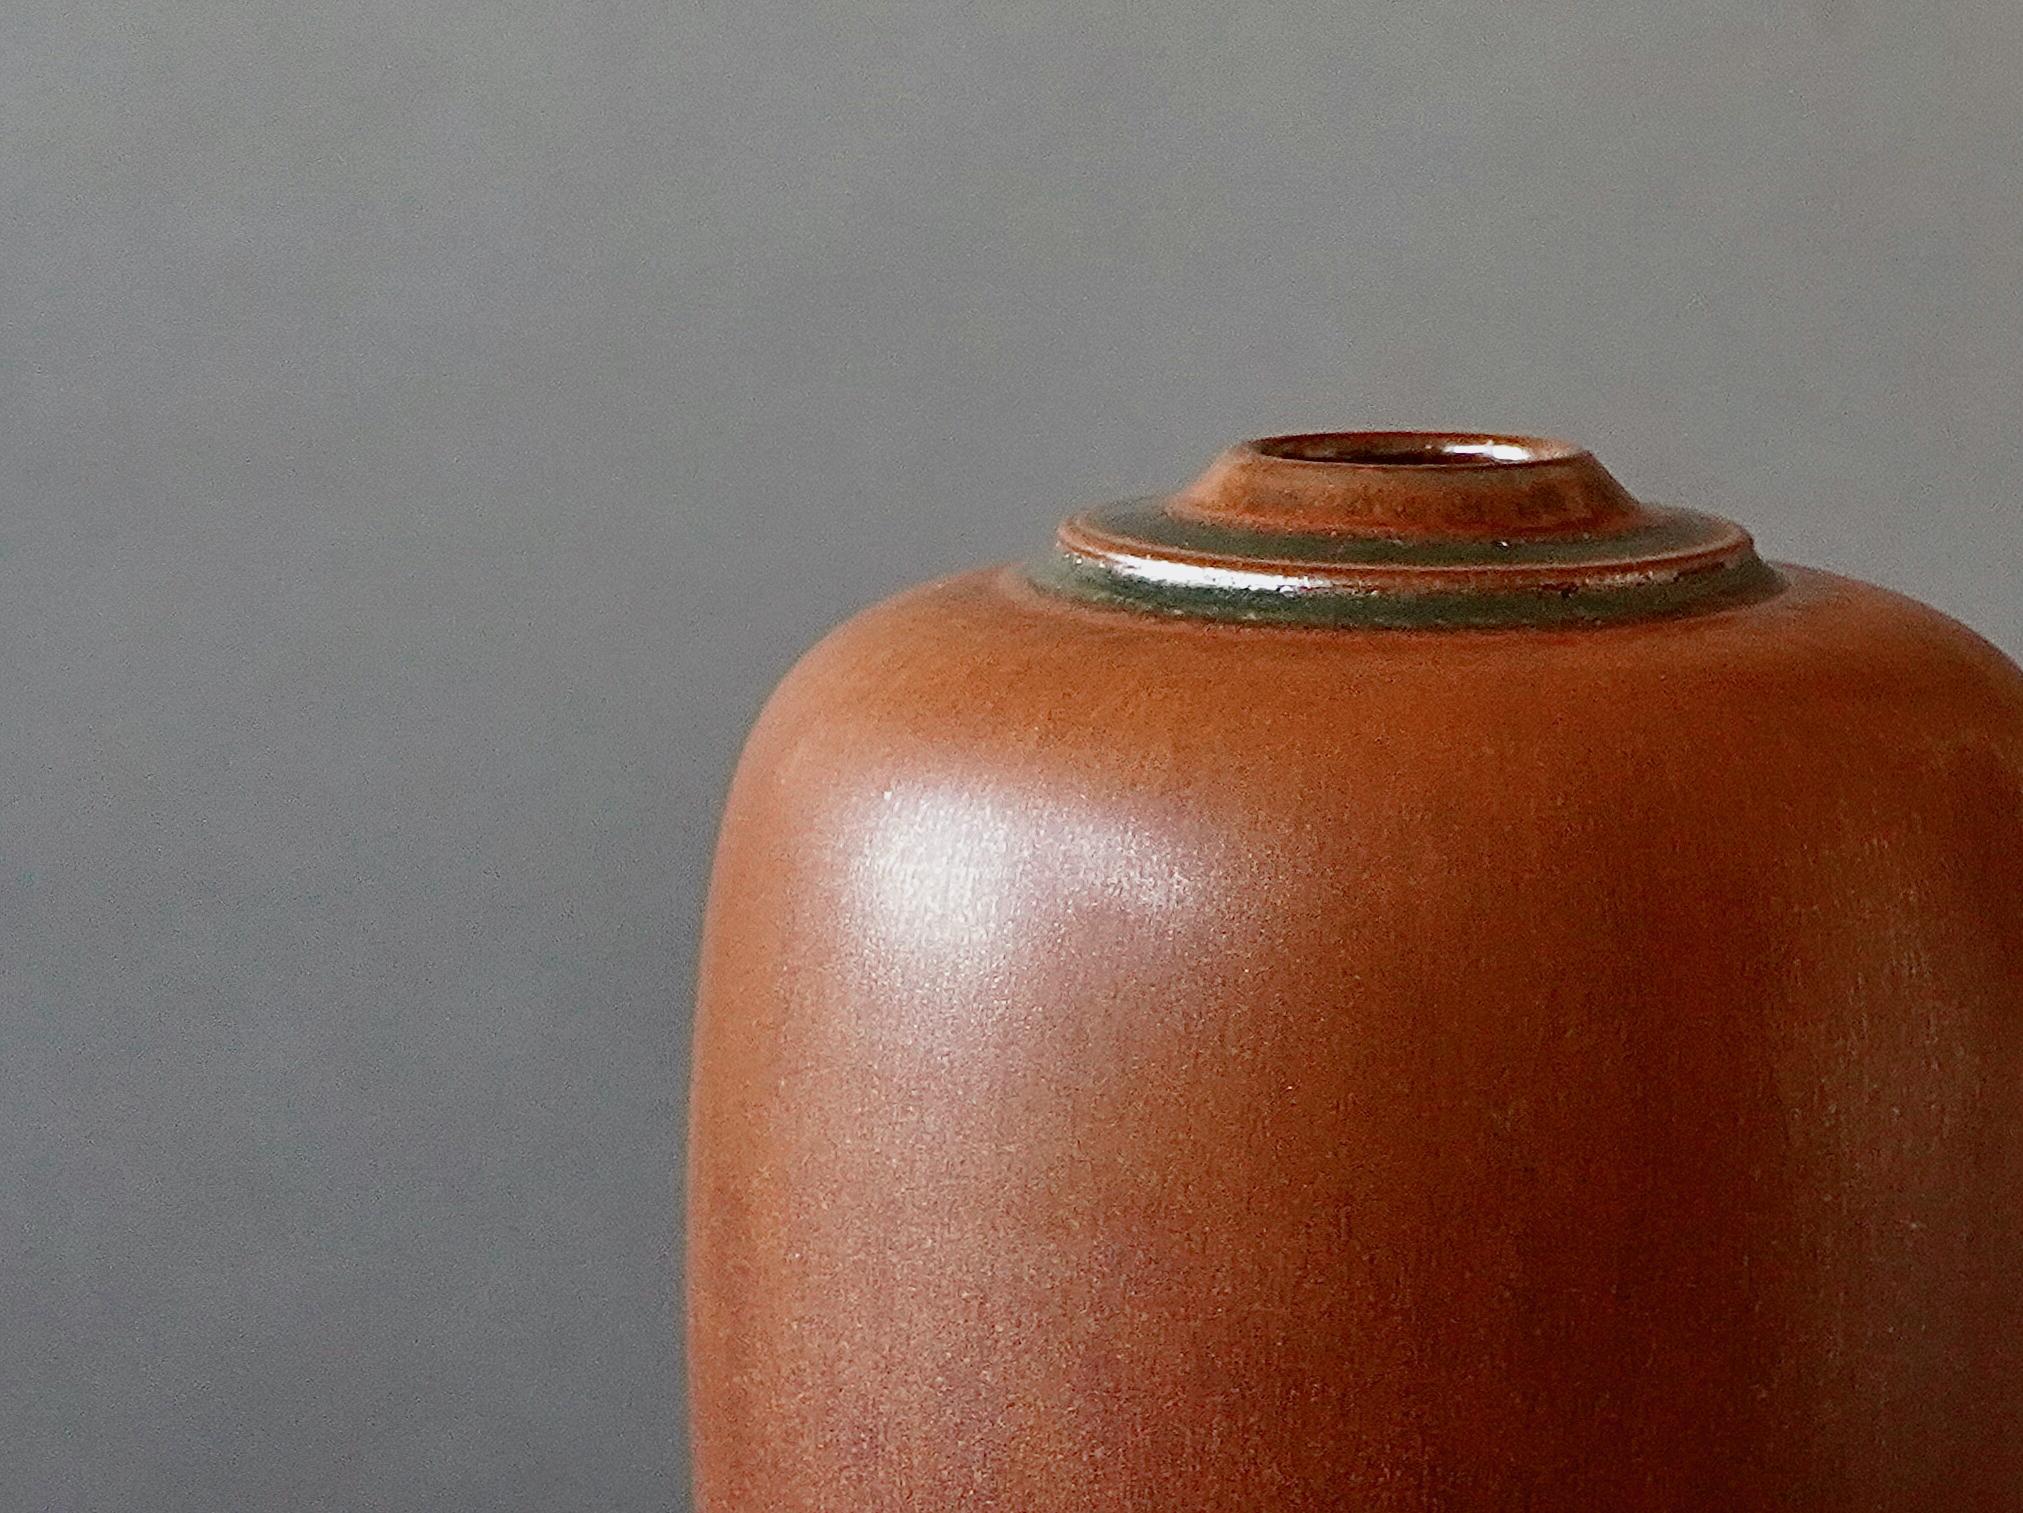 Swedish Stoneware Vase by Erich and Ingrid Triller for Tobo, Sweden, 1950s For Sale